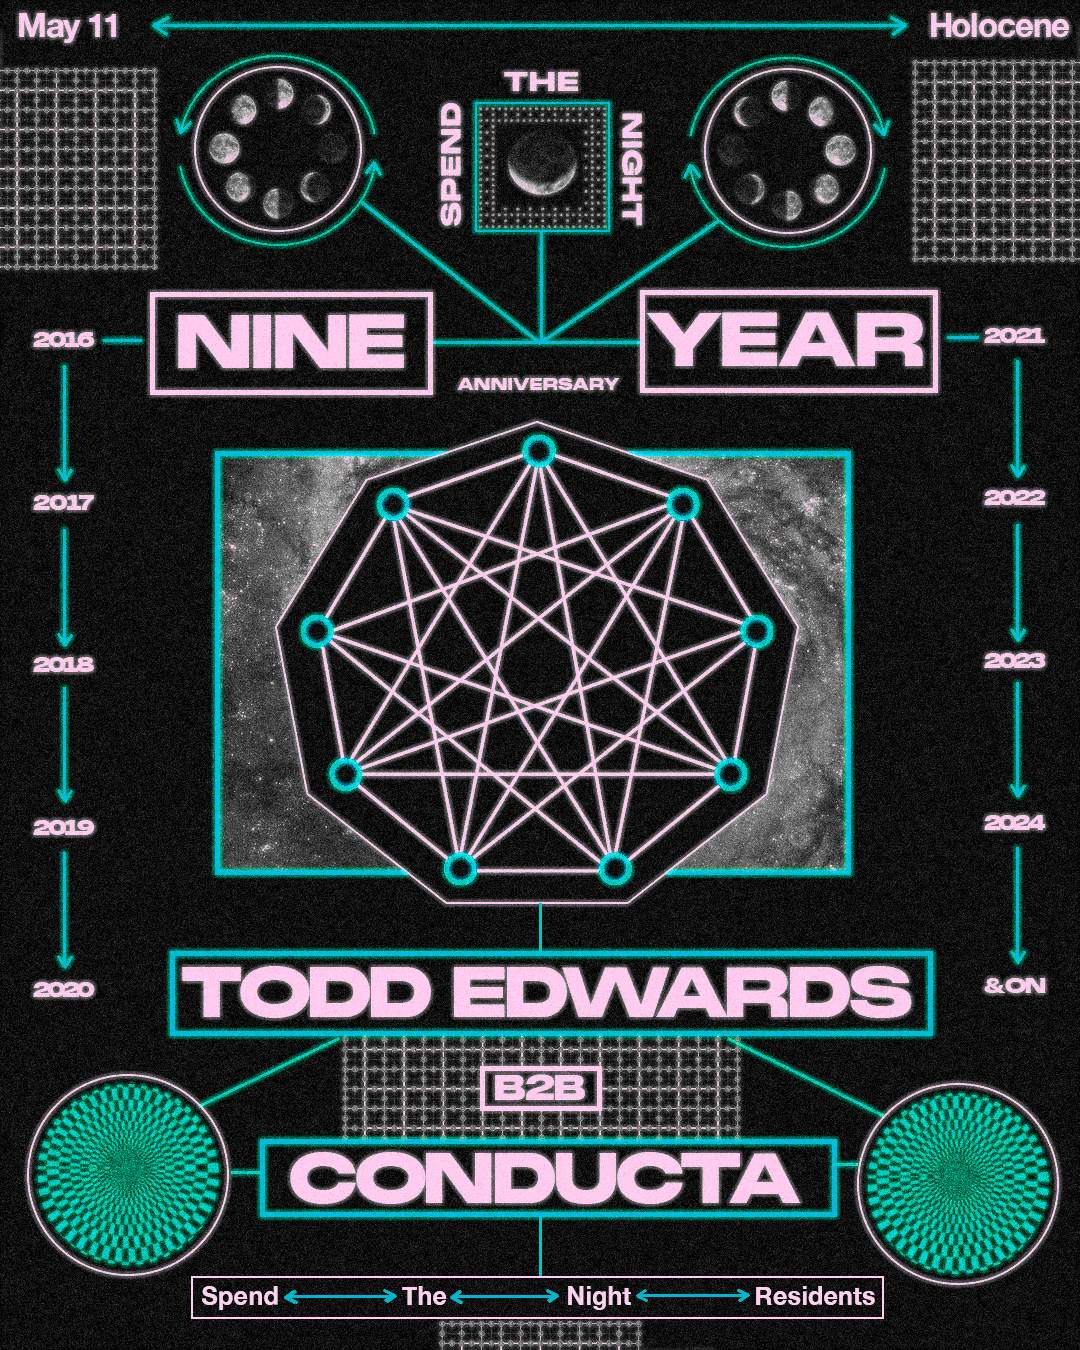 Spend The Night 9 Year: Conducta B2B Todd Edwards - Página frontal